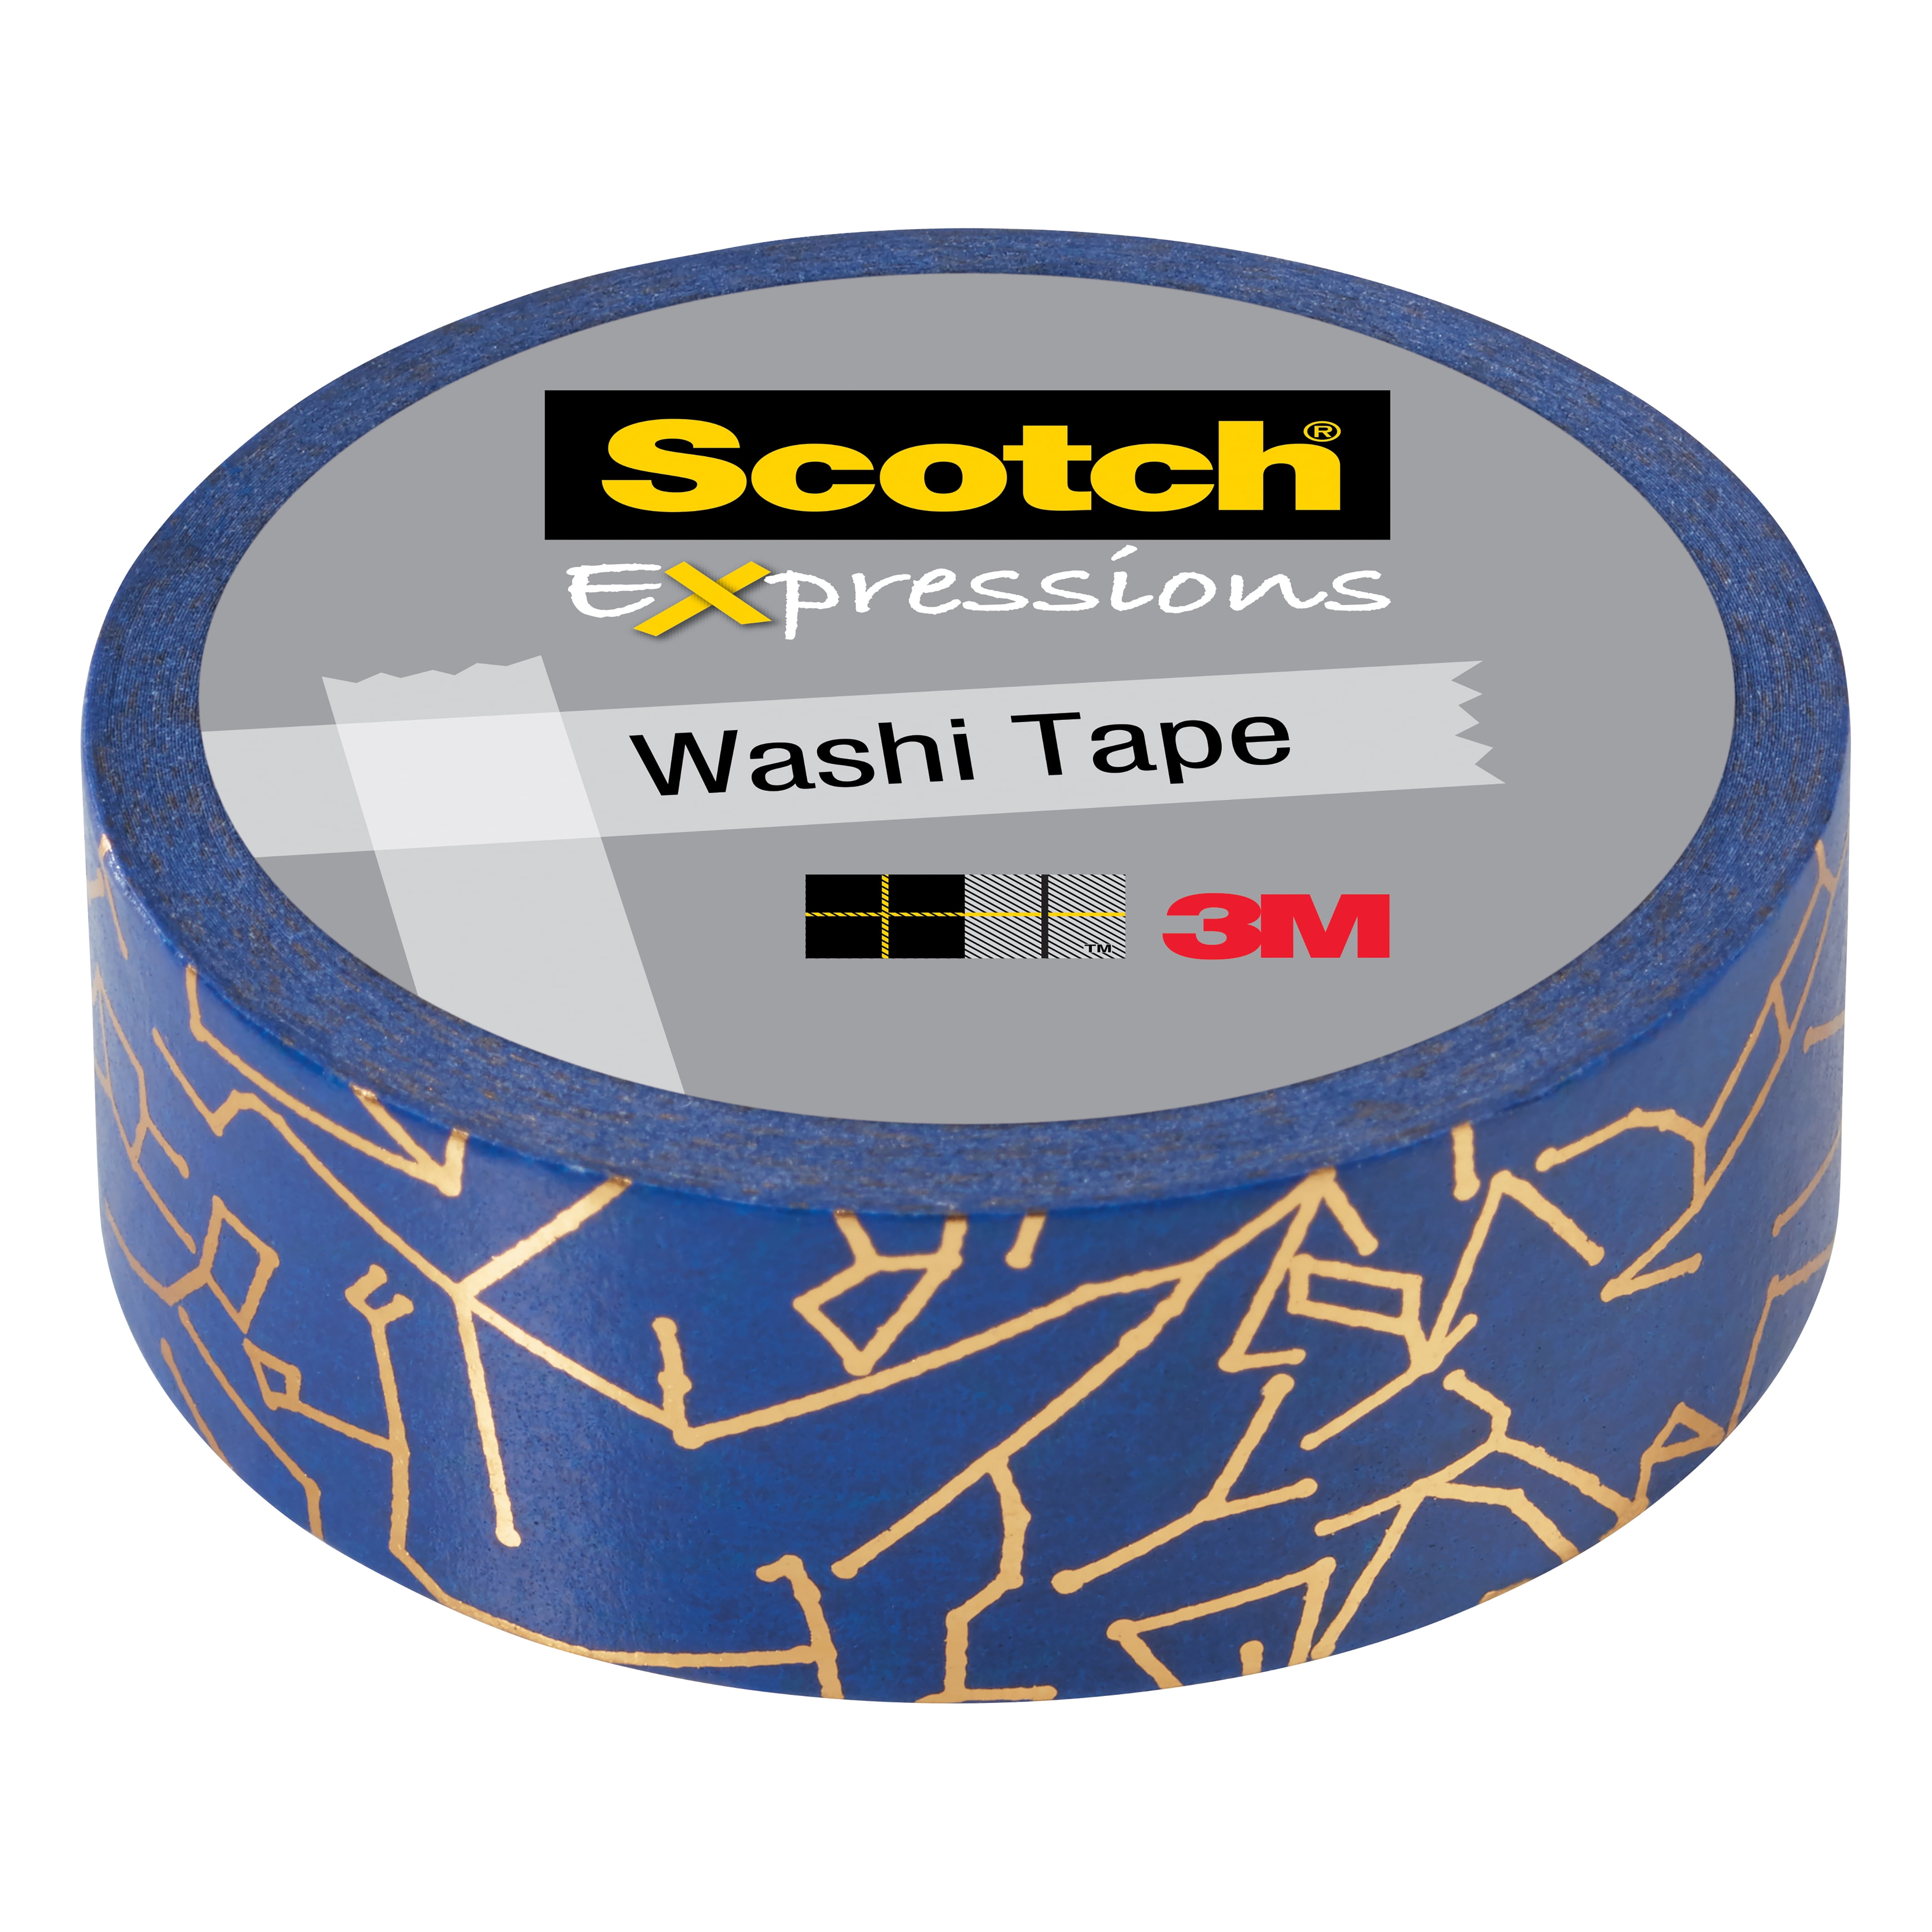 SANWOOD Washi Tape,12 Rolls Washi Masking Tapes Set Japanese Decorative  Writable Vintage Sticker Gift for DIY Crafts Arts Scrapbooking Journal  Planners,Flower Design 